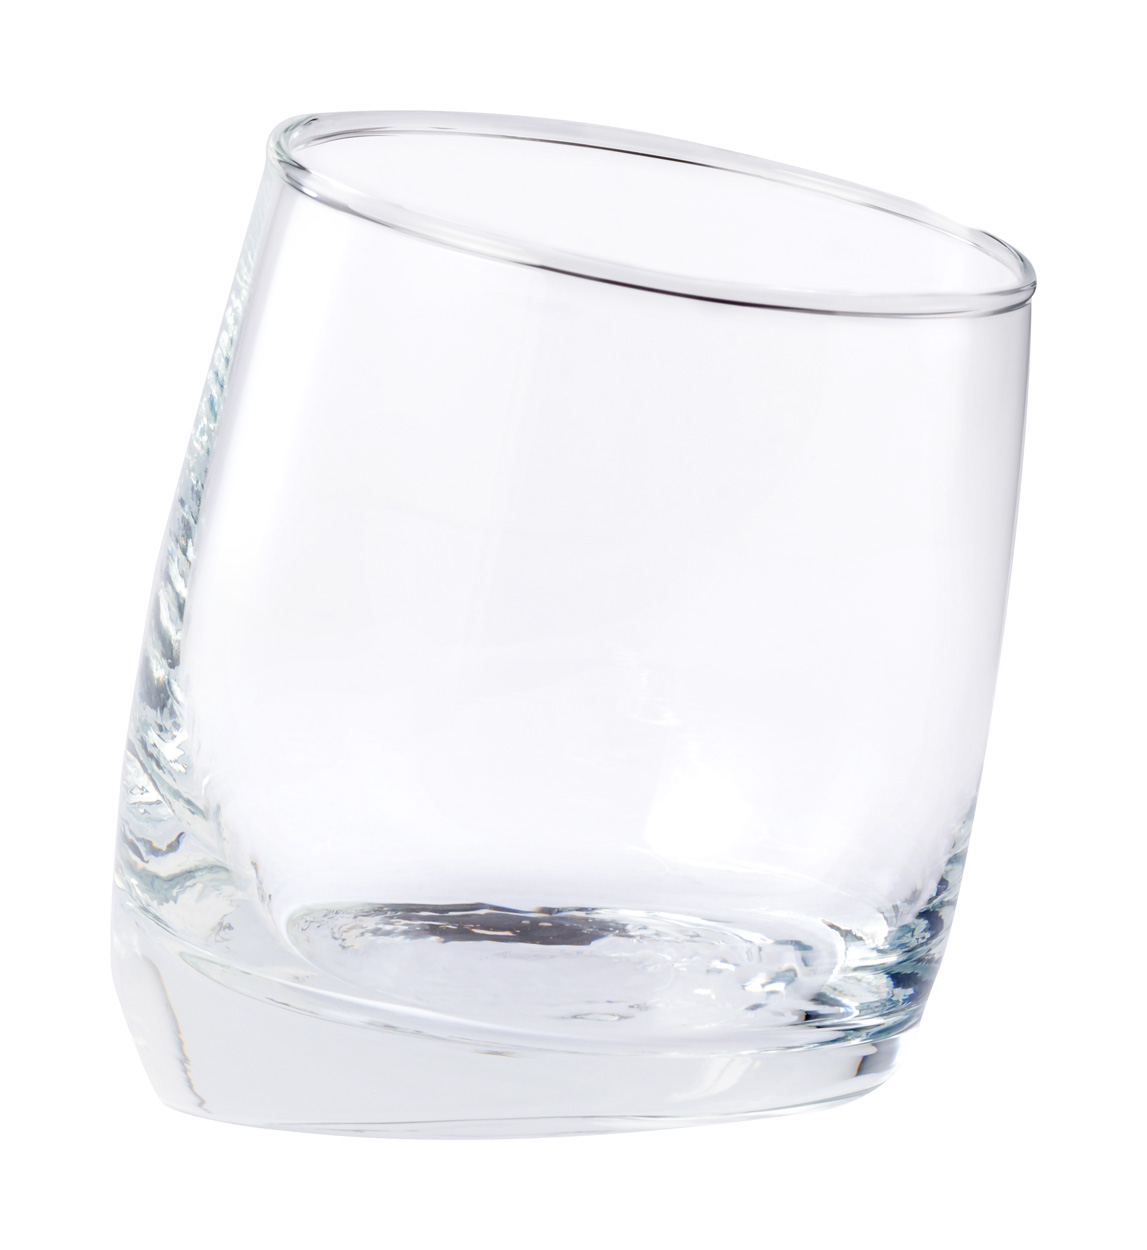 Promo  Merzex whisky glass